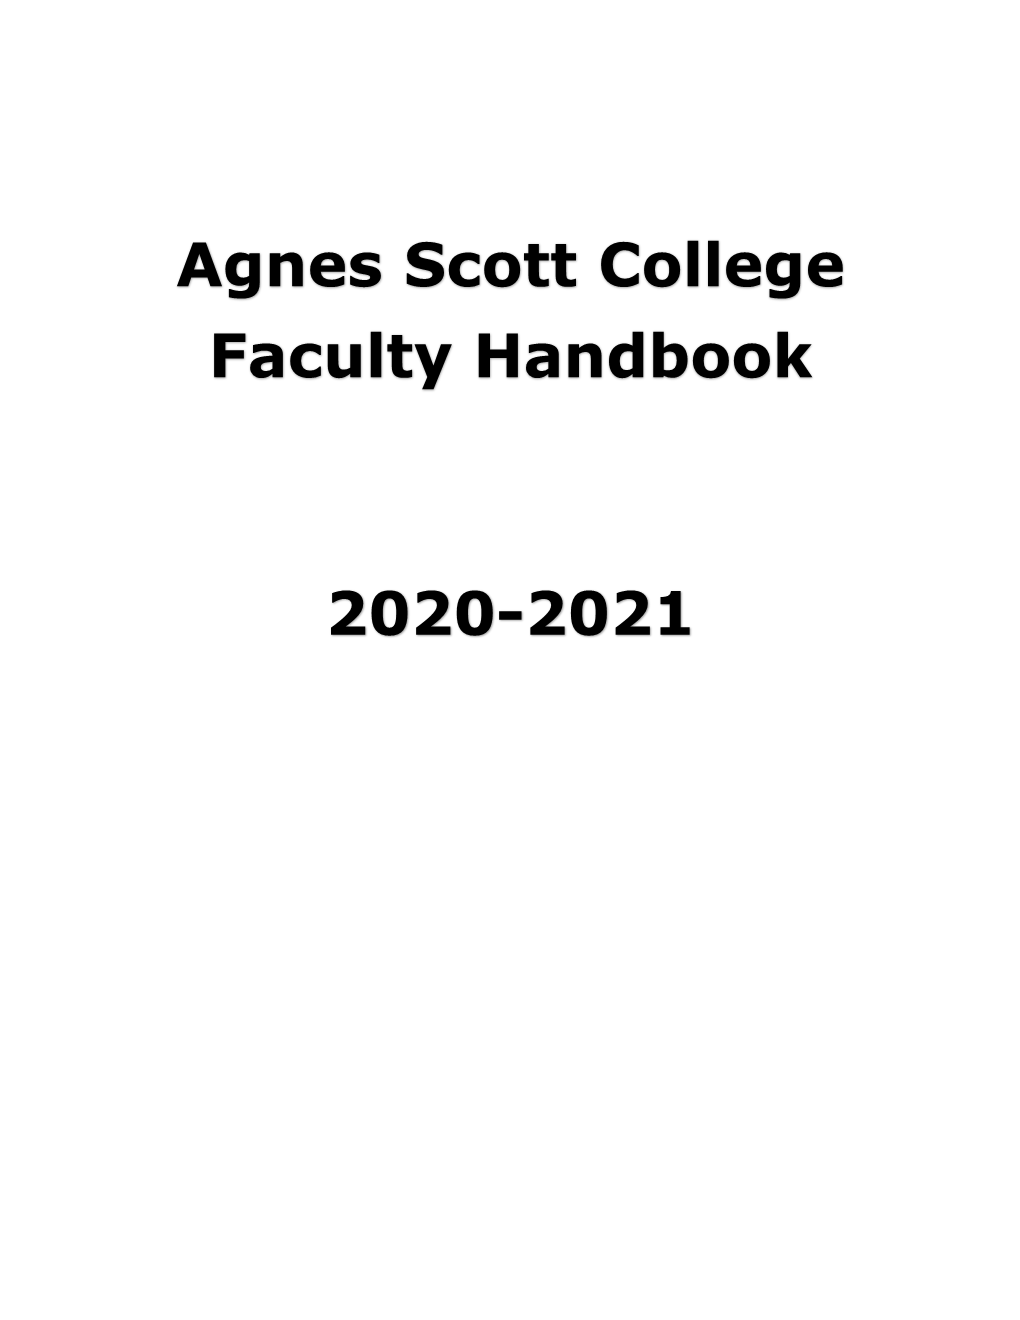 Faculty Handbook 2020-2021